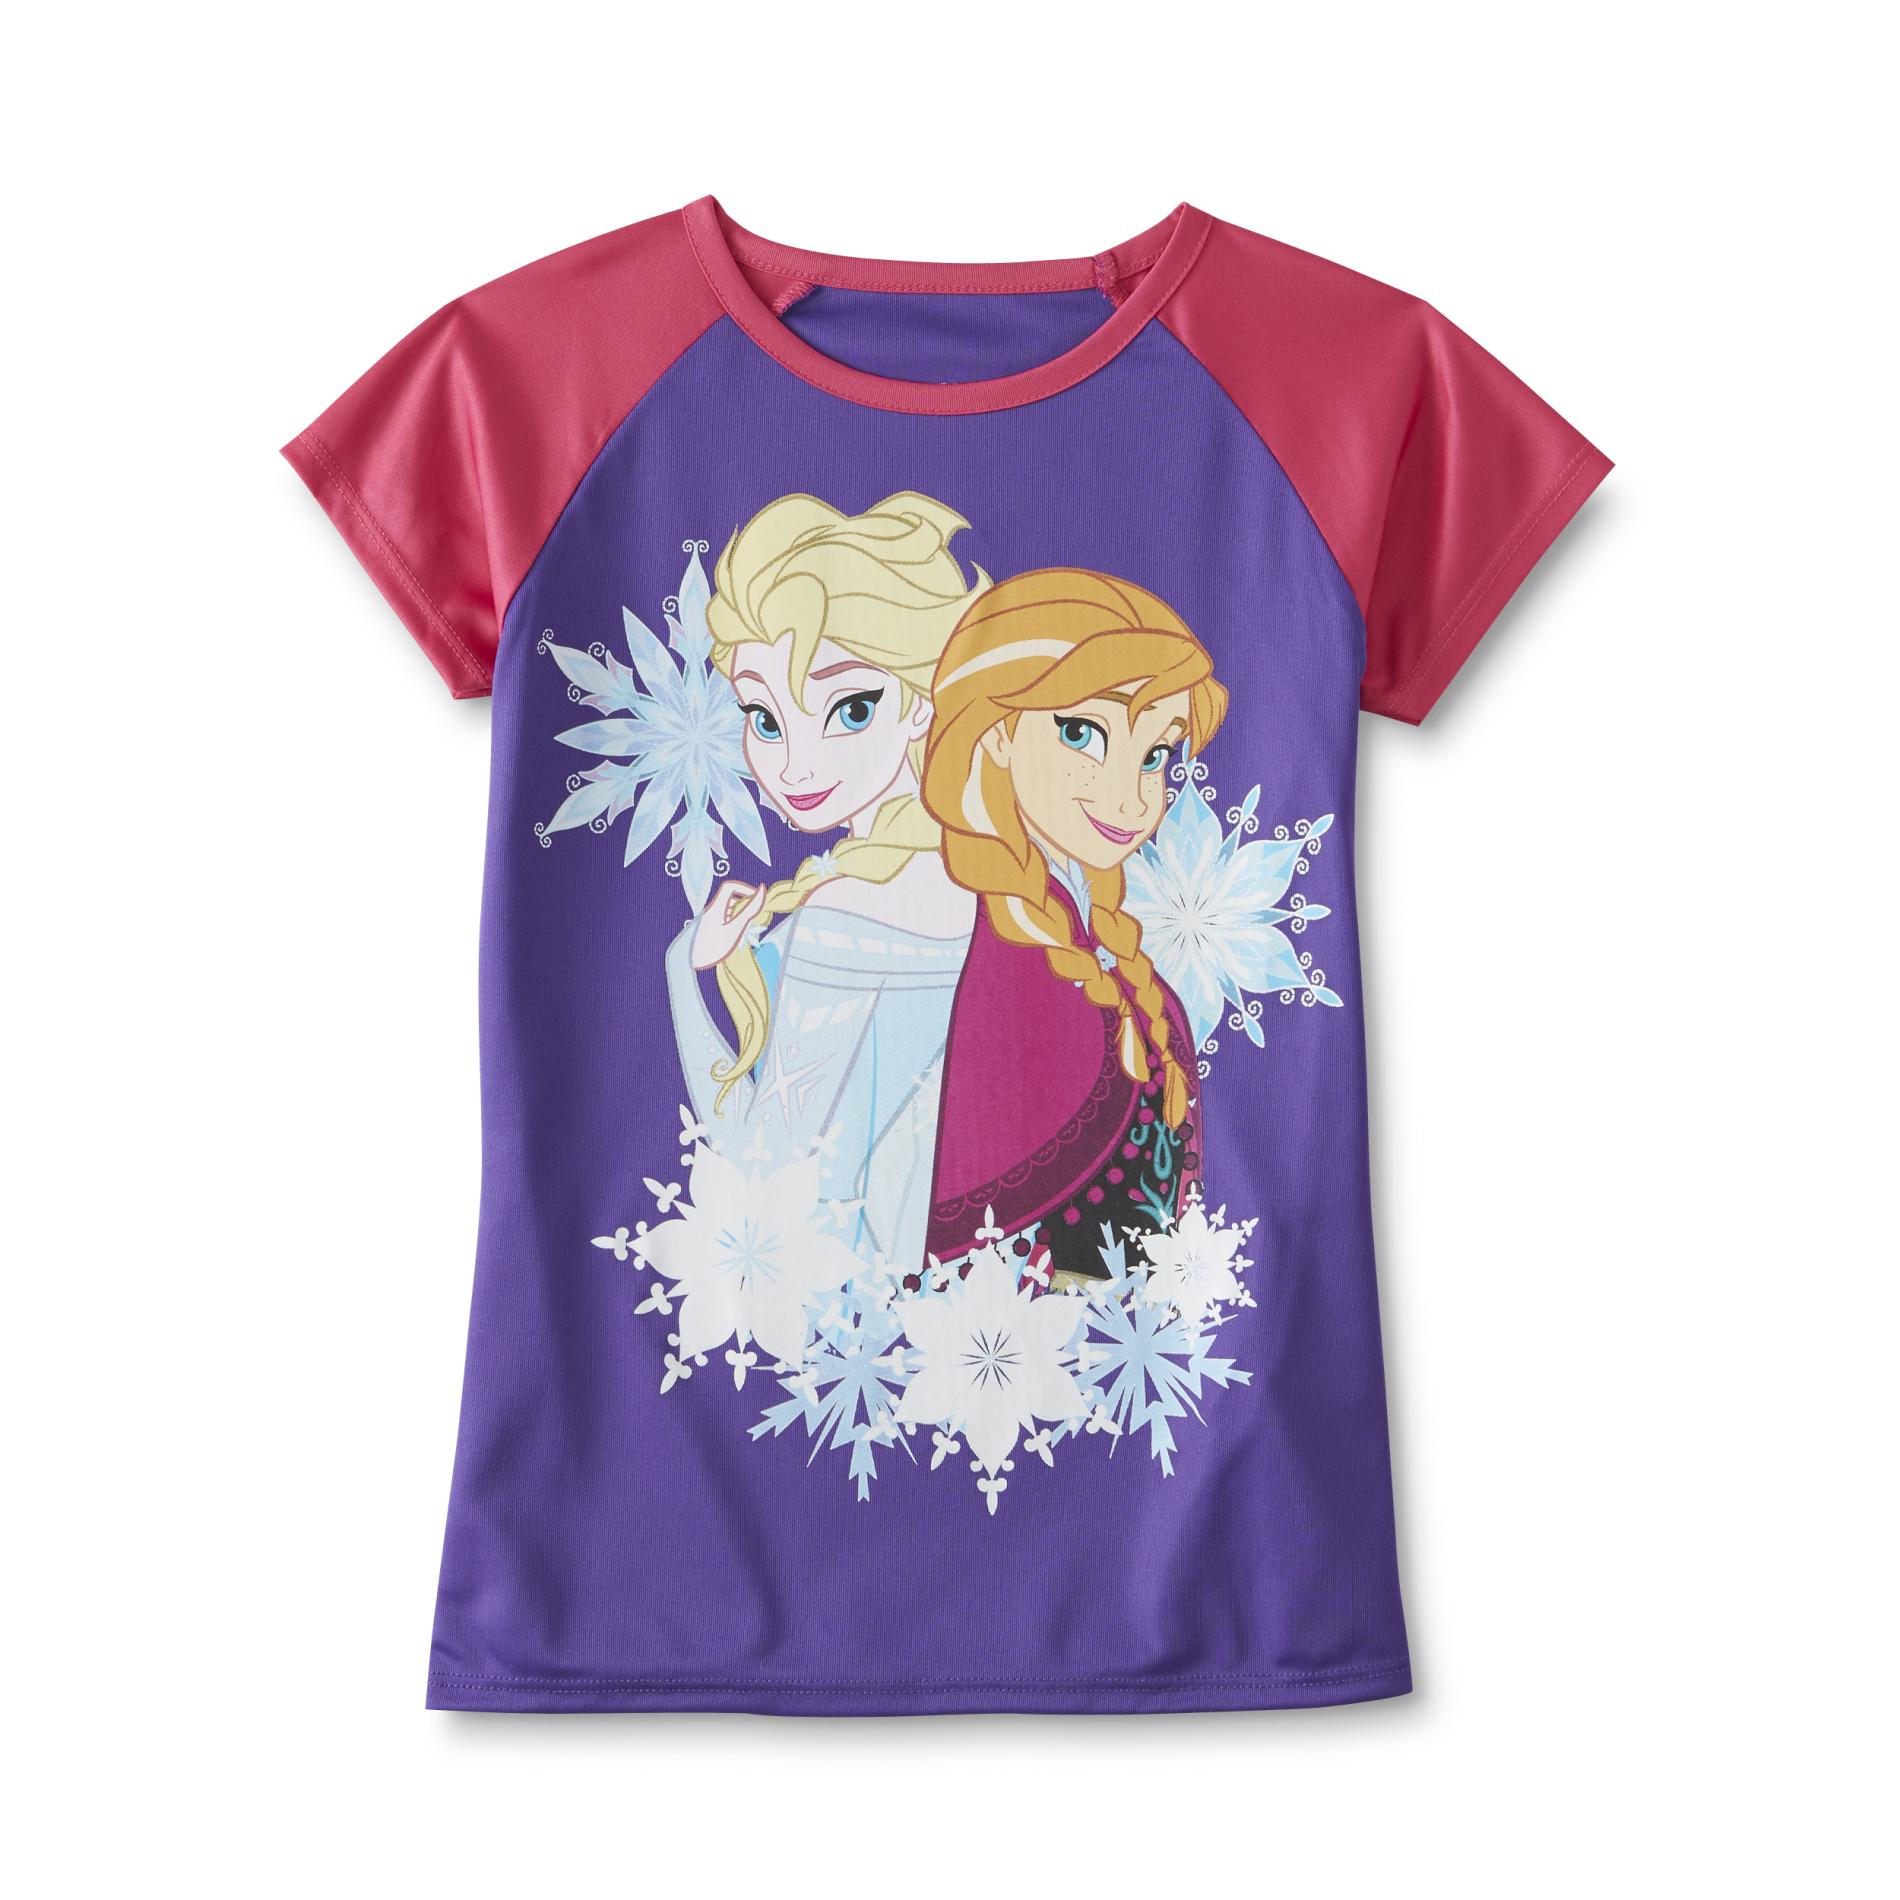 Disney Frozen Girl's Graphic Athletic T-Shirt - Anna & Elsa